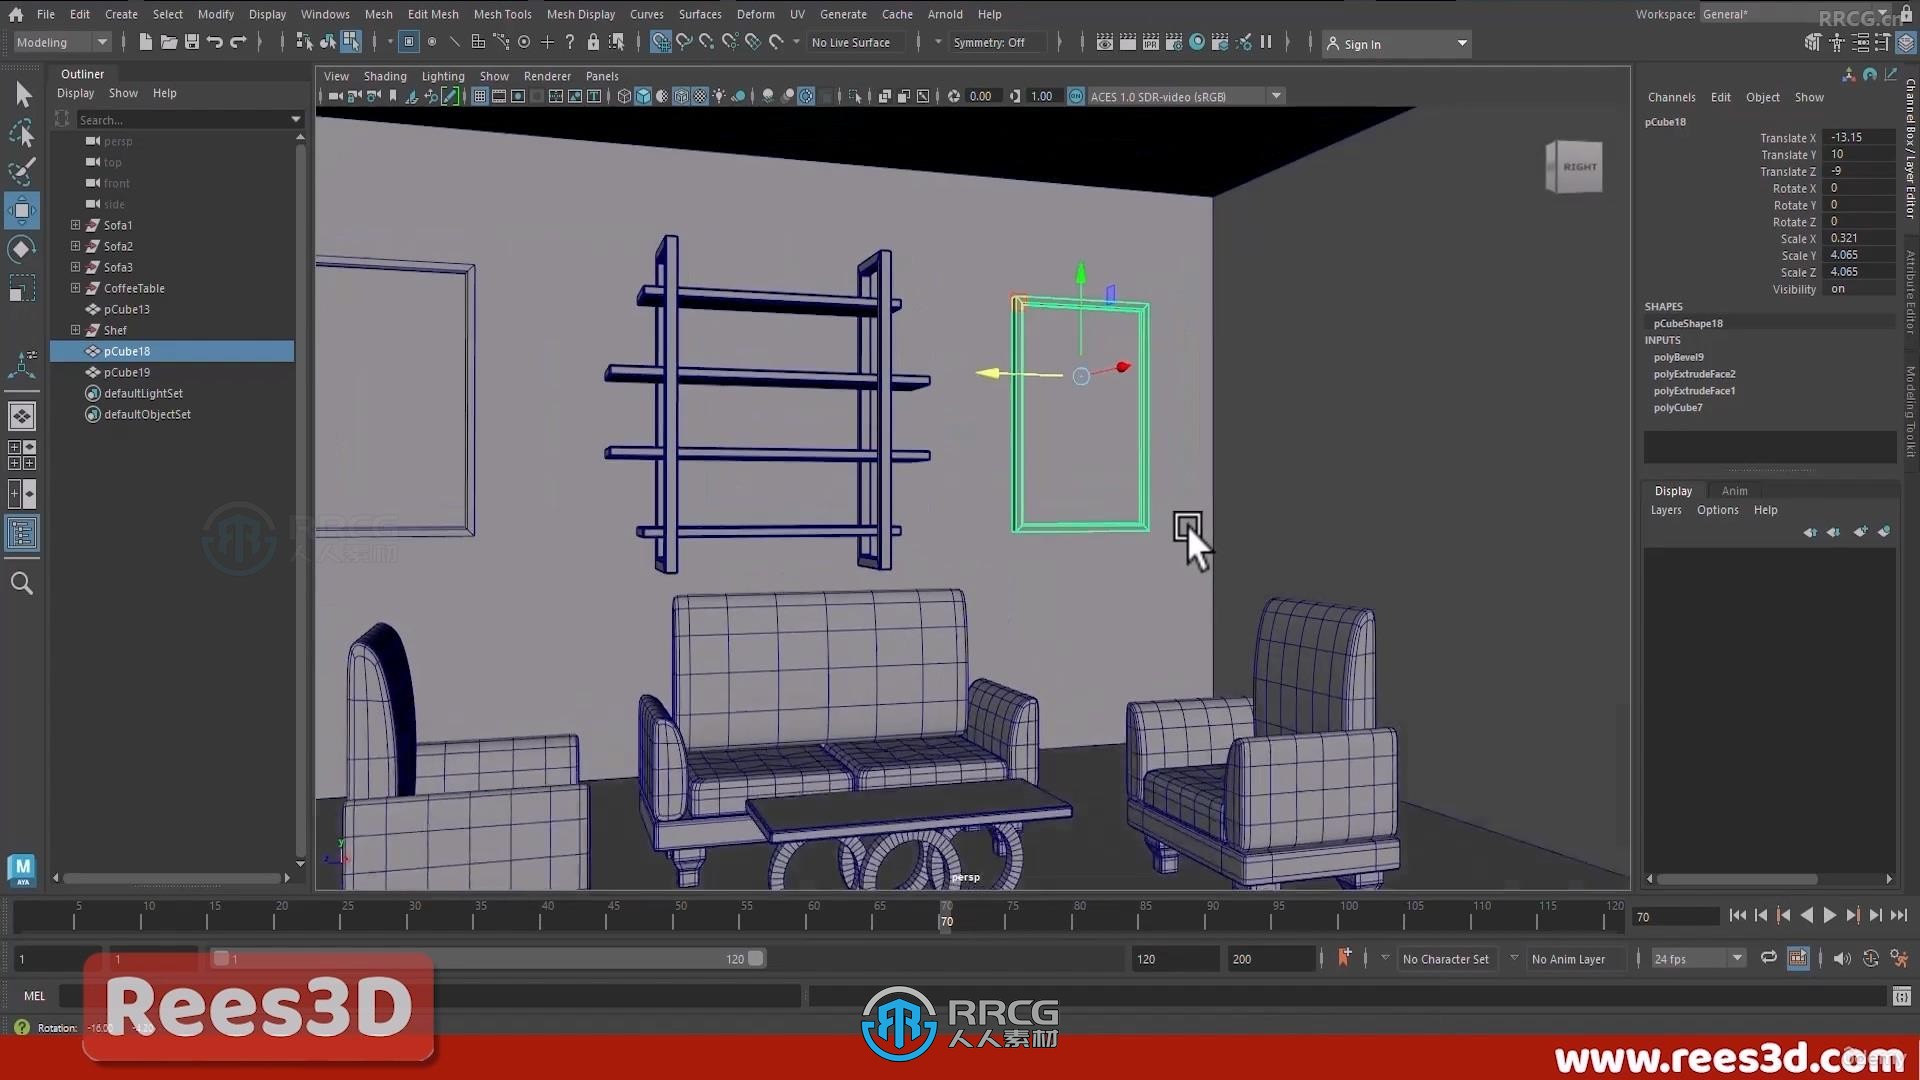 Maya客厅家具3D室内设计技术训练视频教程